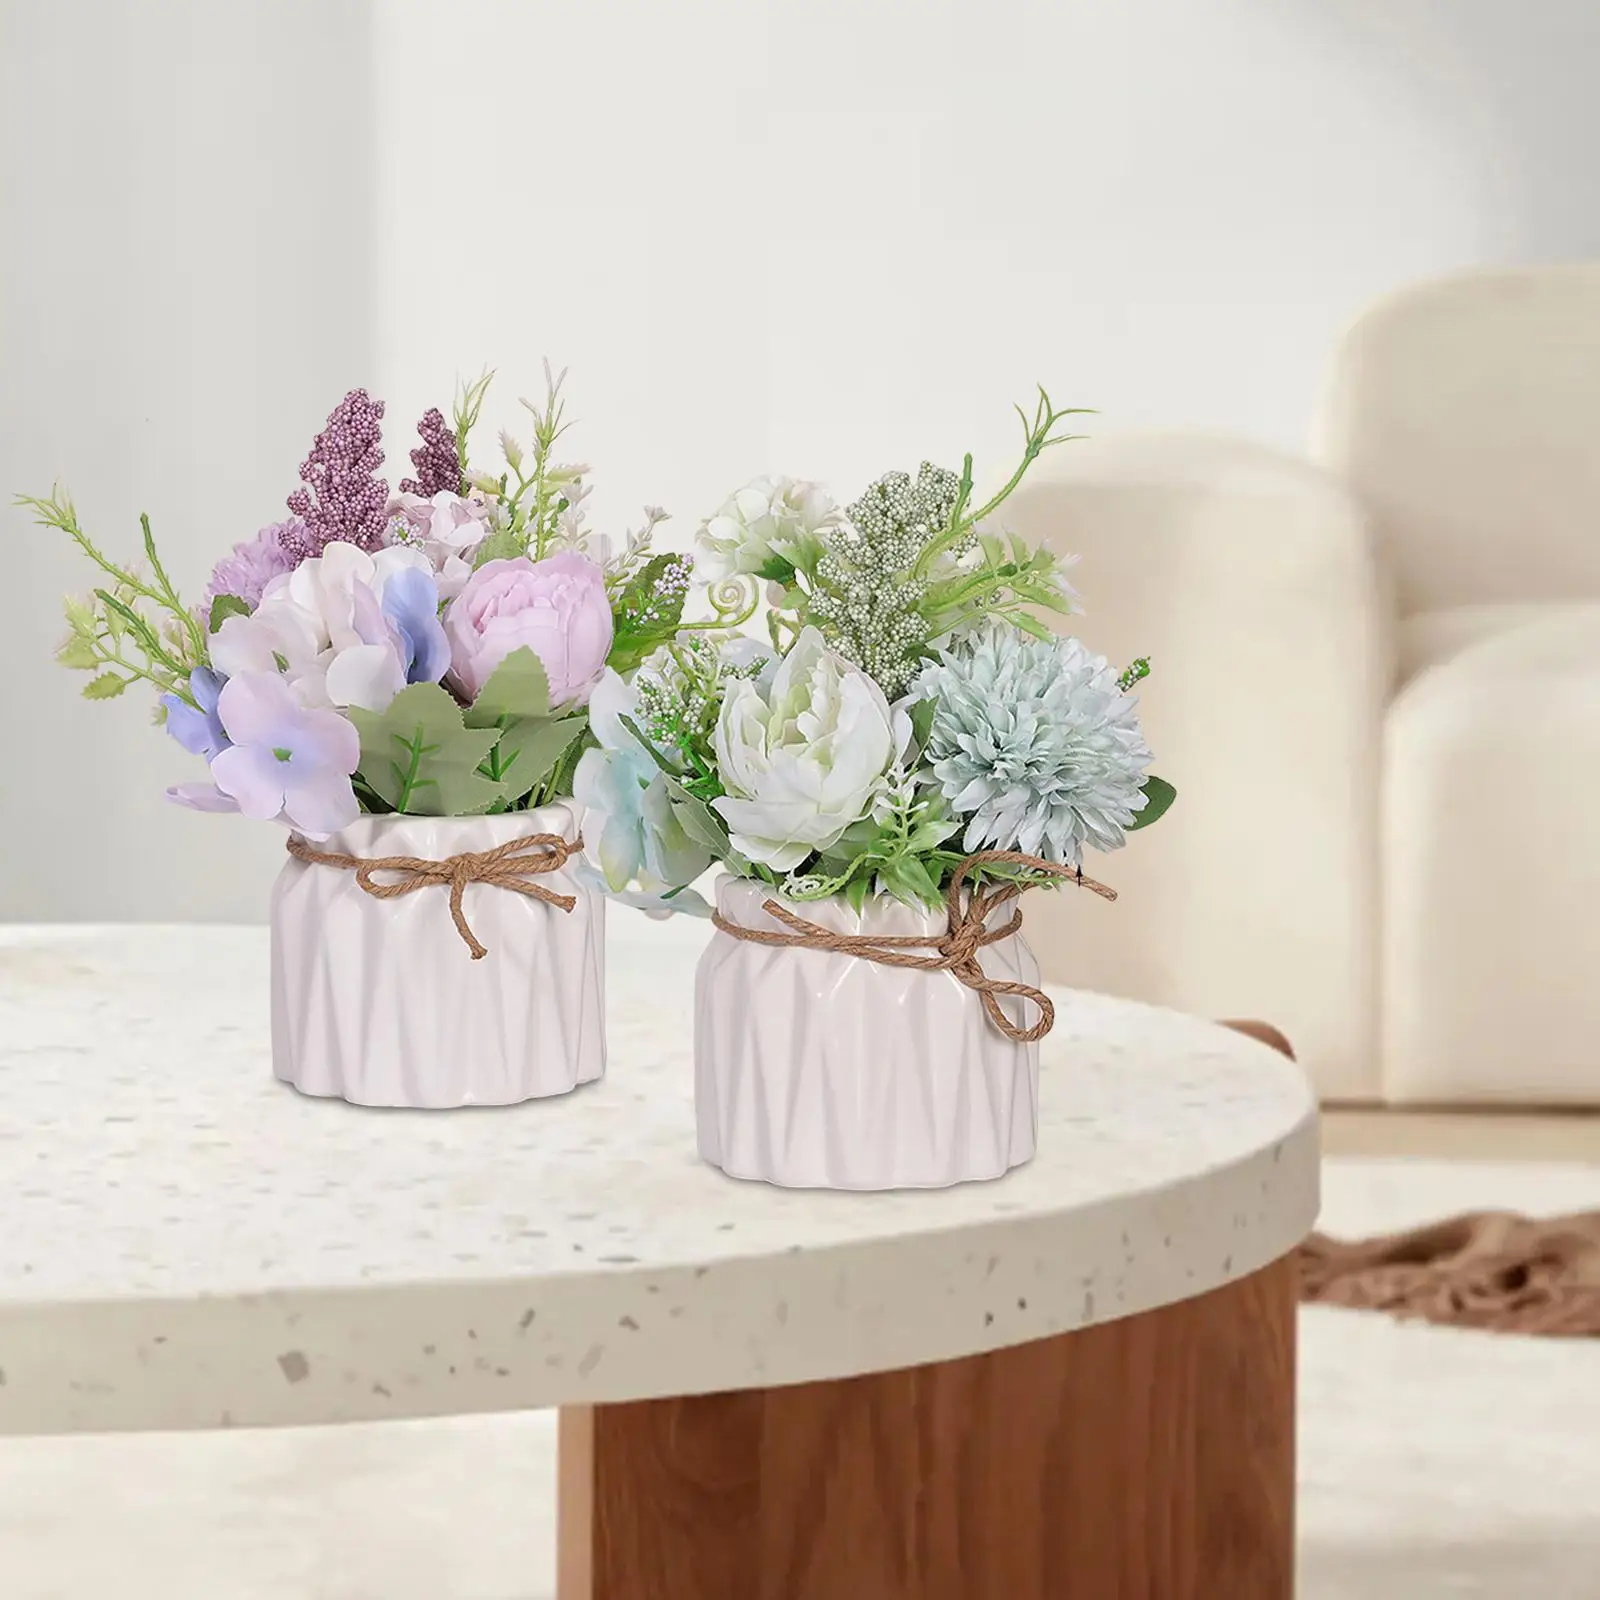 Mini Artificial Flowers Hydrangea Bonsai, with Ceramic Vase Plant Floral Arrangement, for Home Party Decor Ornament Gift